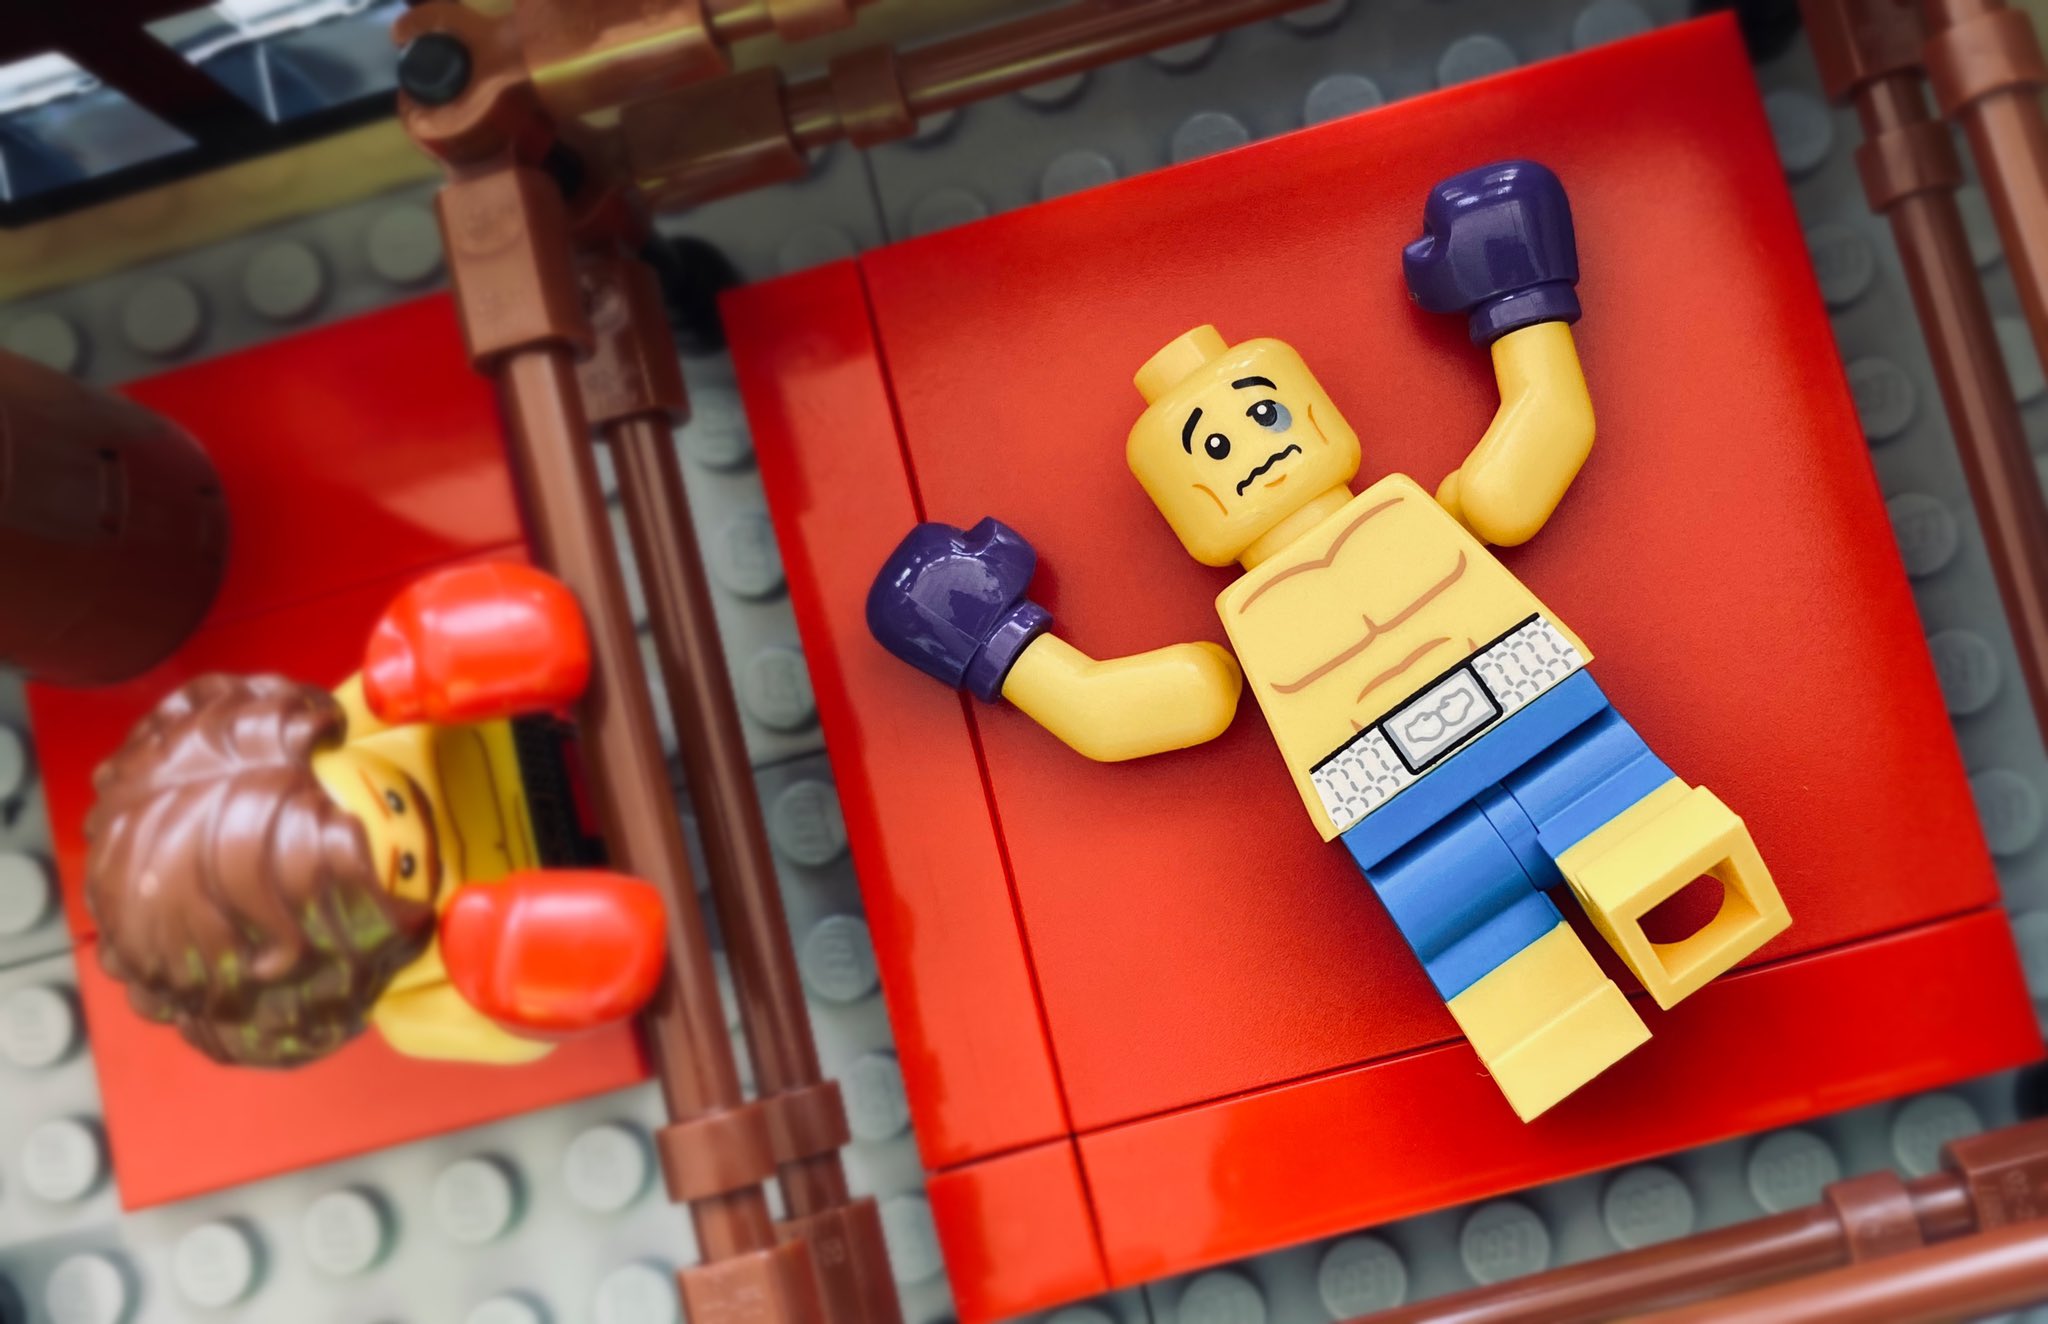 FireStar Toys - AWESOME LEGO LOVE on Twitter: "RT McBricksReviews "This  Monday hit me hard. Knocked me right off my feet. #boxing  #boxersofinstagram #boxingtraining #boxer #mondaymotivation #monday  #mondaymood #boxinggloves #lego #legominifigures ...